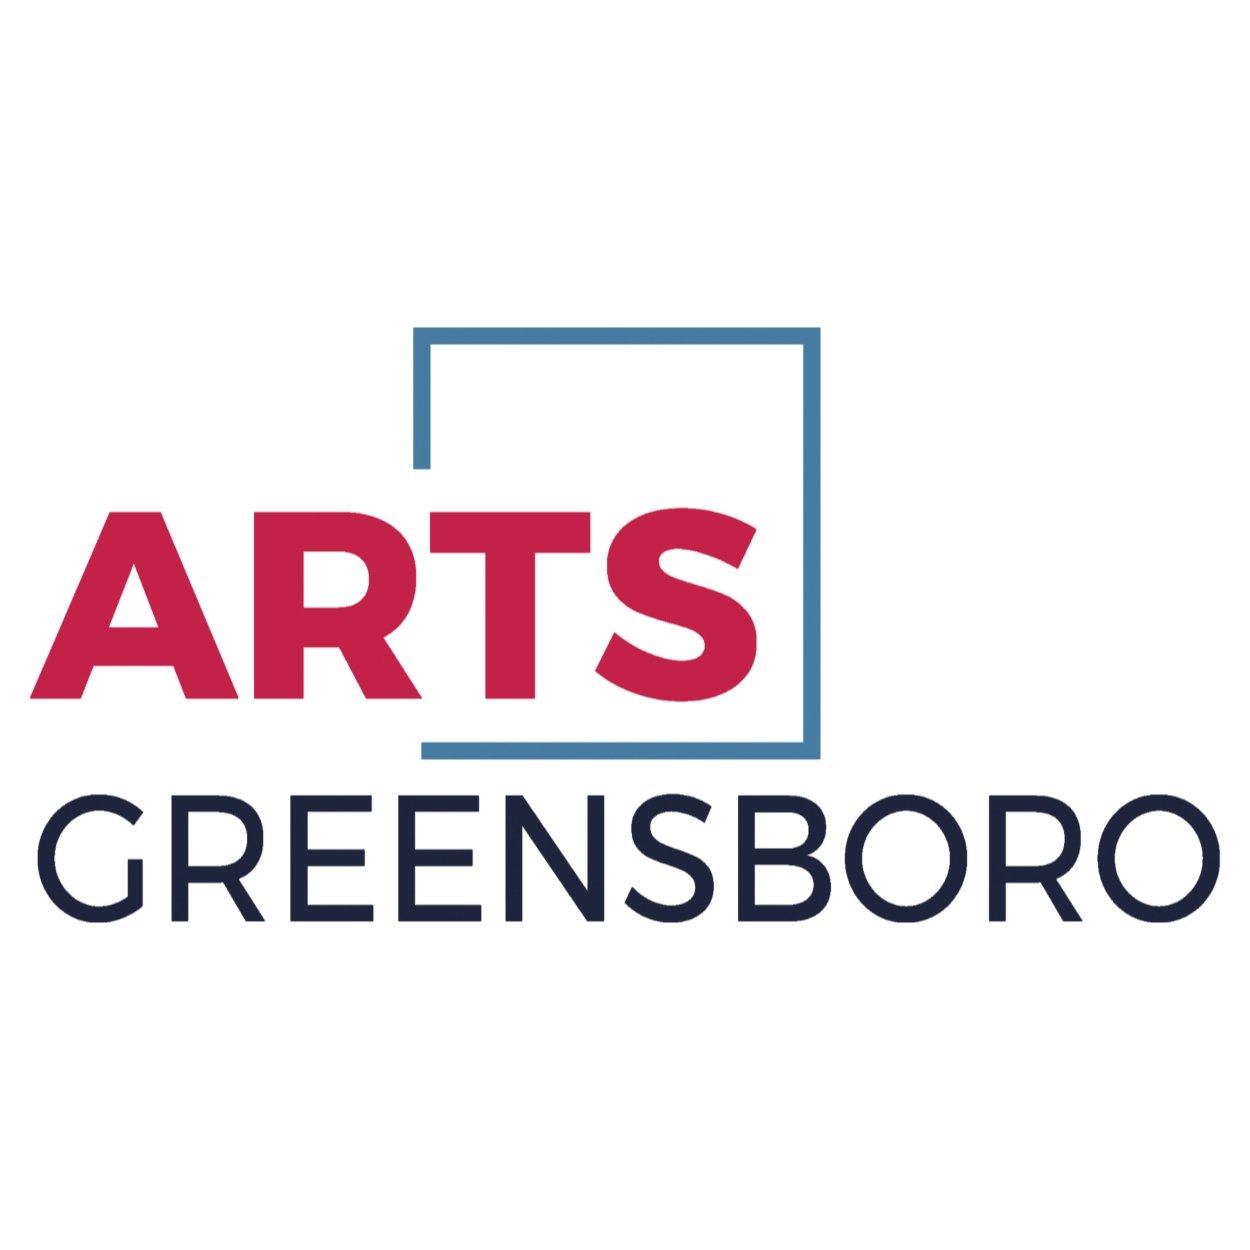 Arts GSO logo 2.jpg